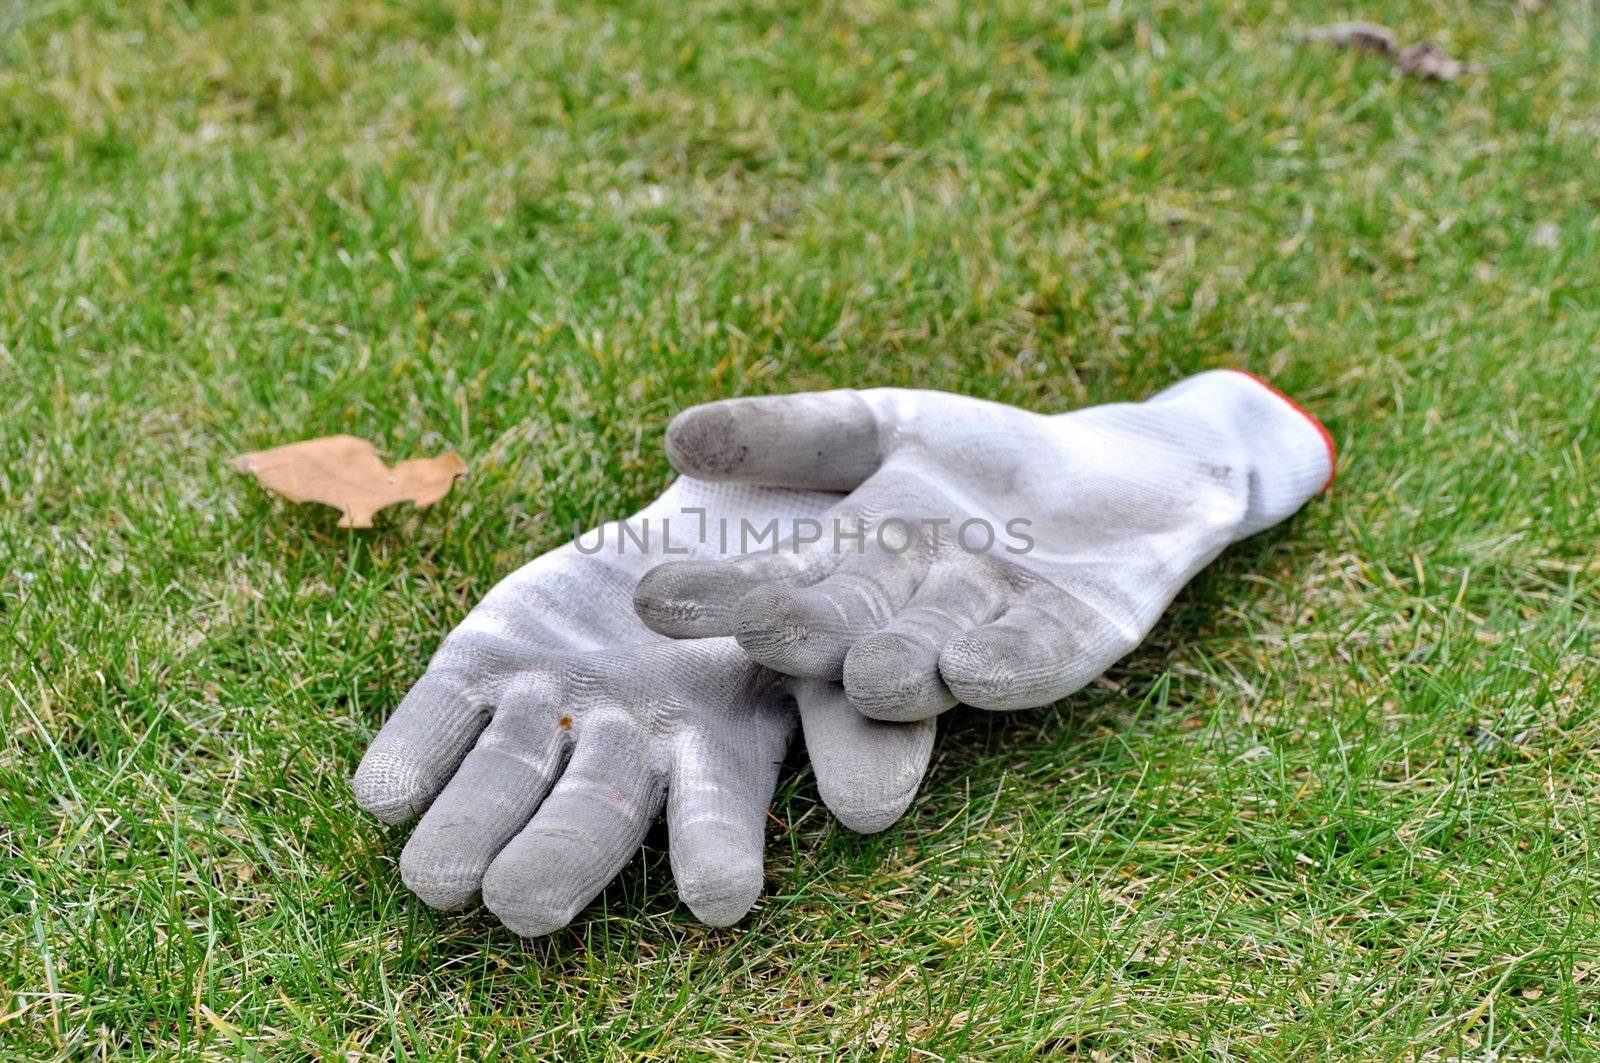 Dirty gardening gloves on the grass